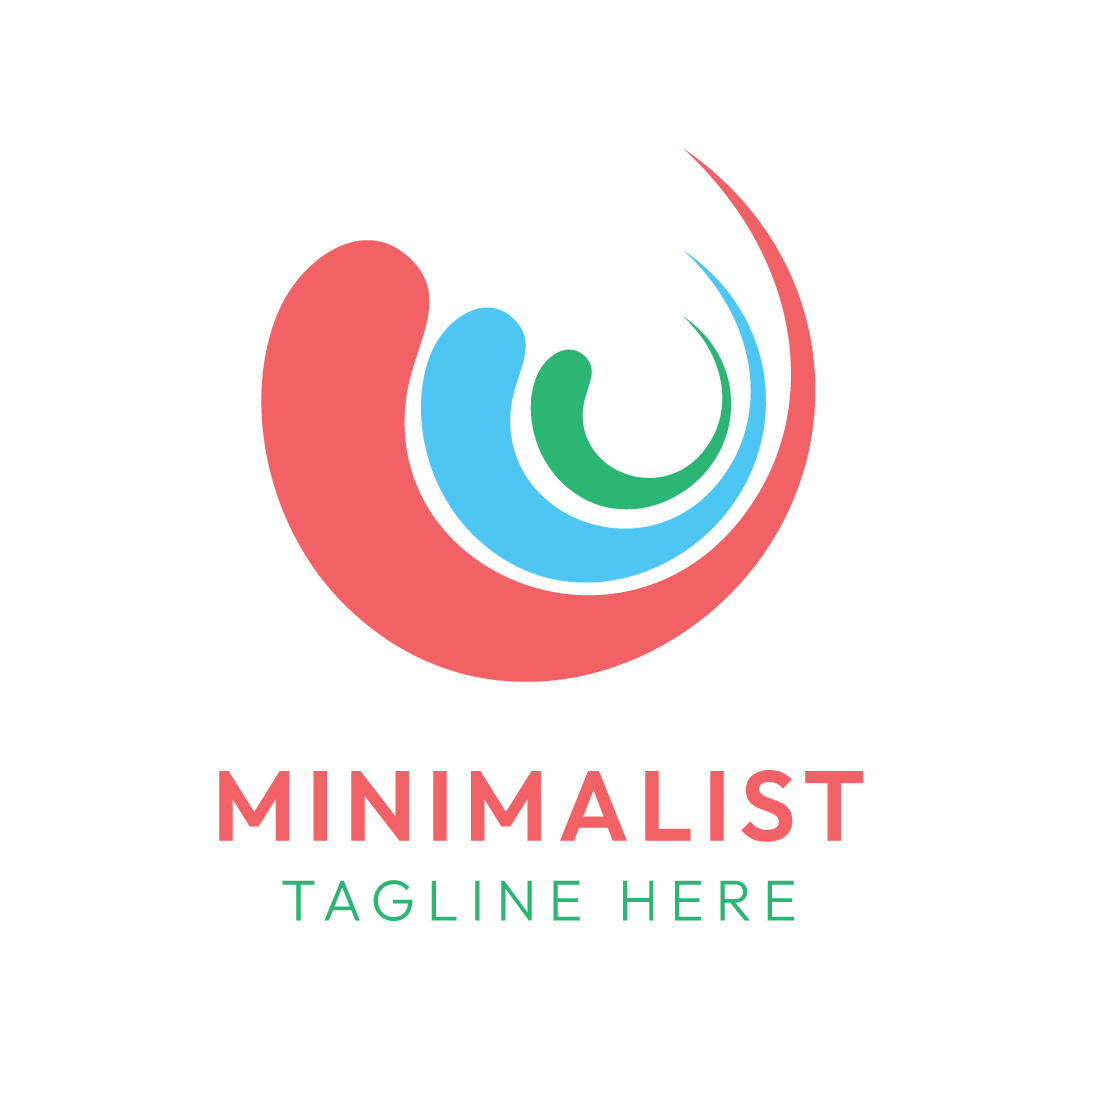 Ultimate Minimalist Logo Design Bundle – Master Collection cover image.